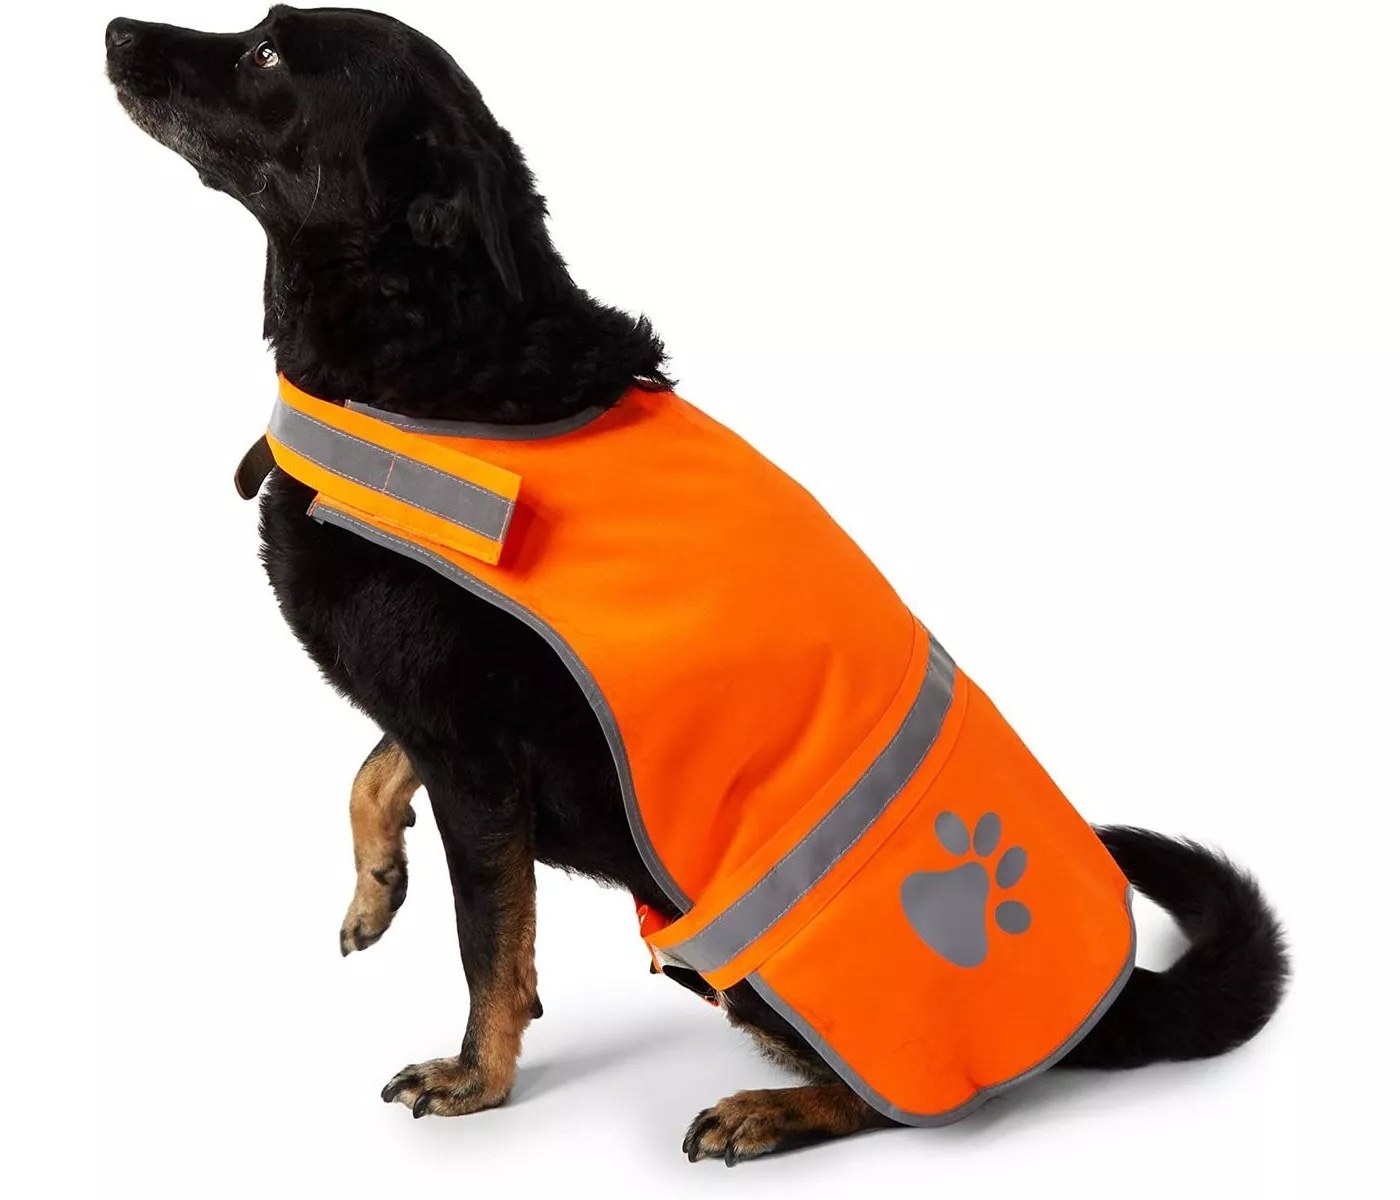 A dog wearing the orange safety